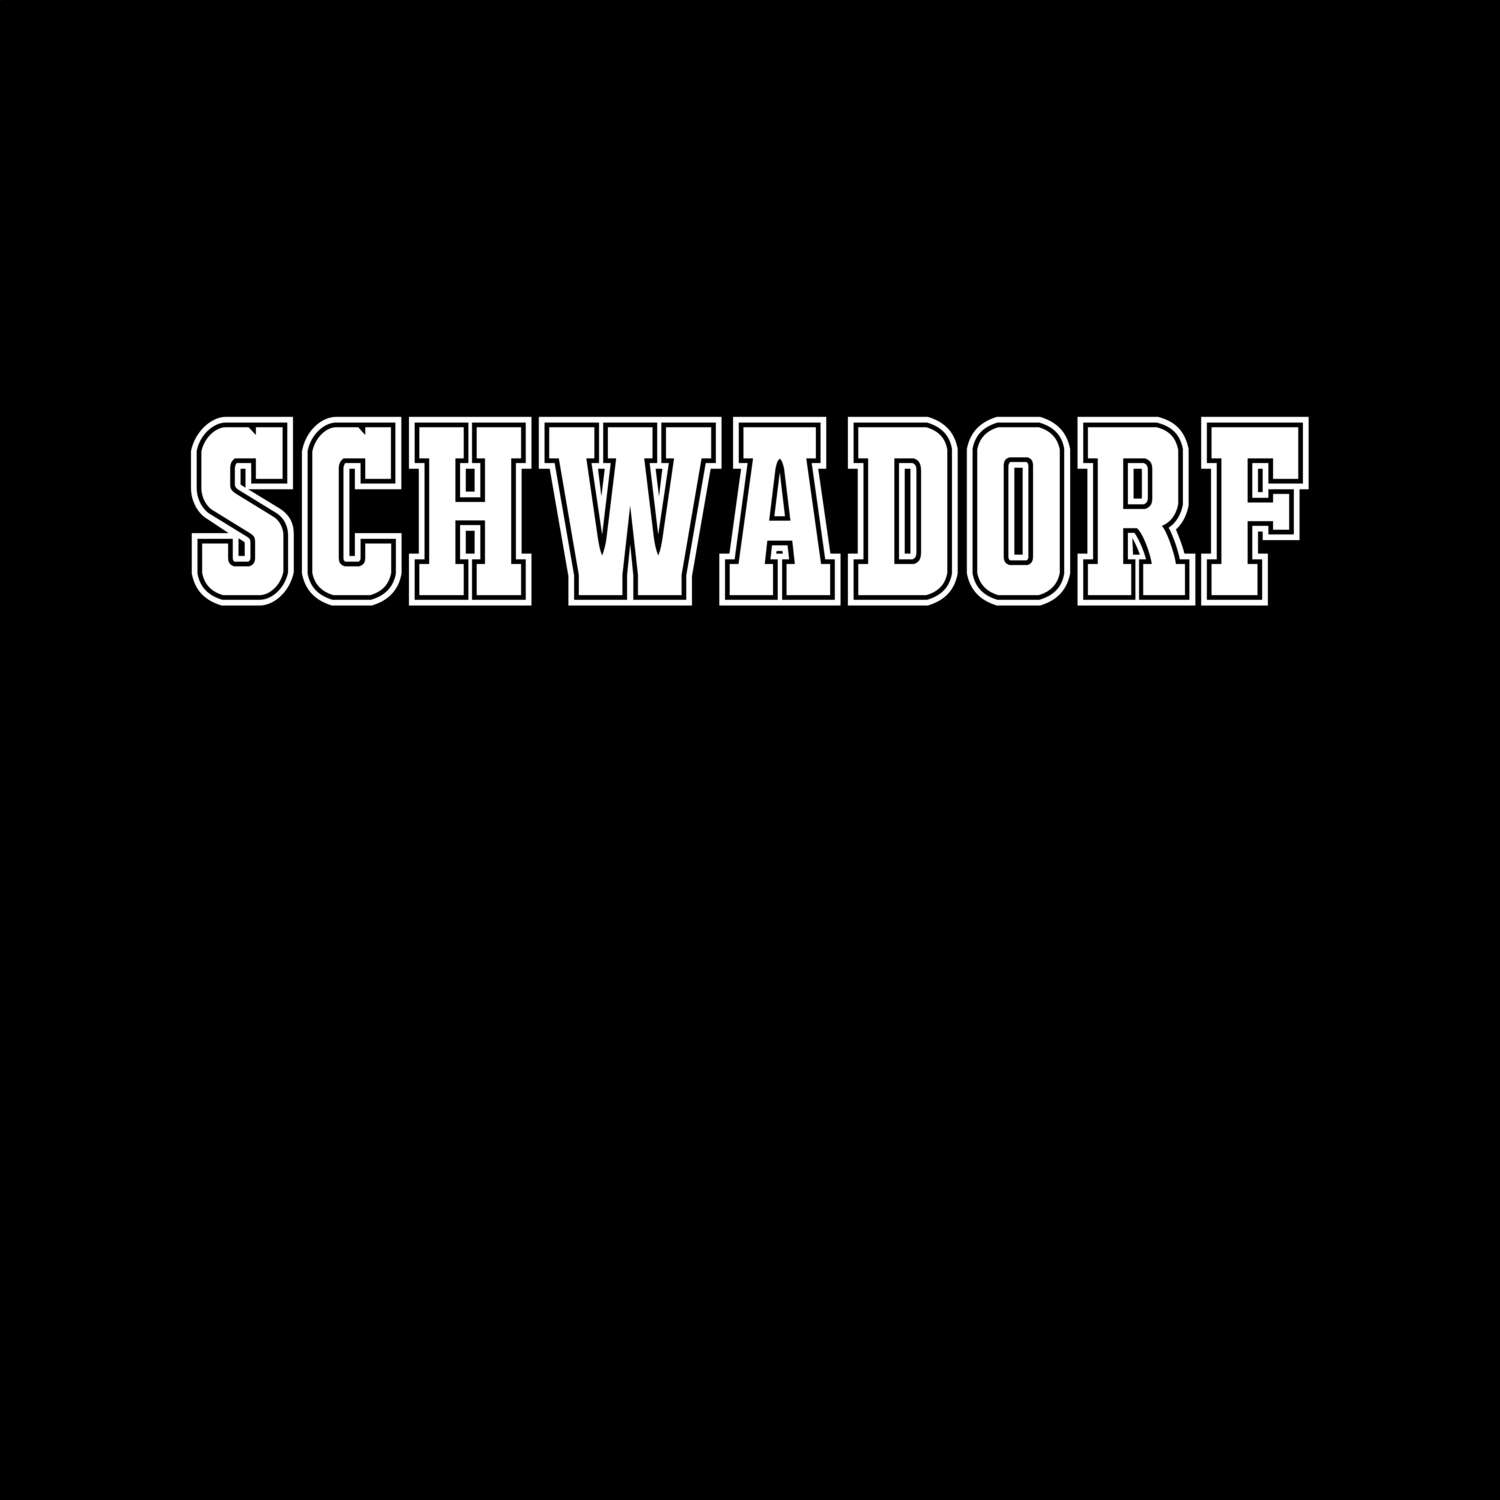 Schwadorf T-Shirt »Classic«